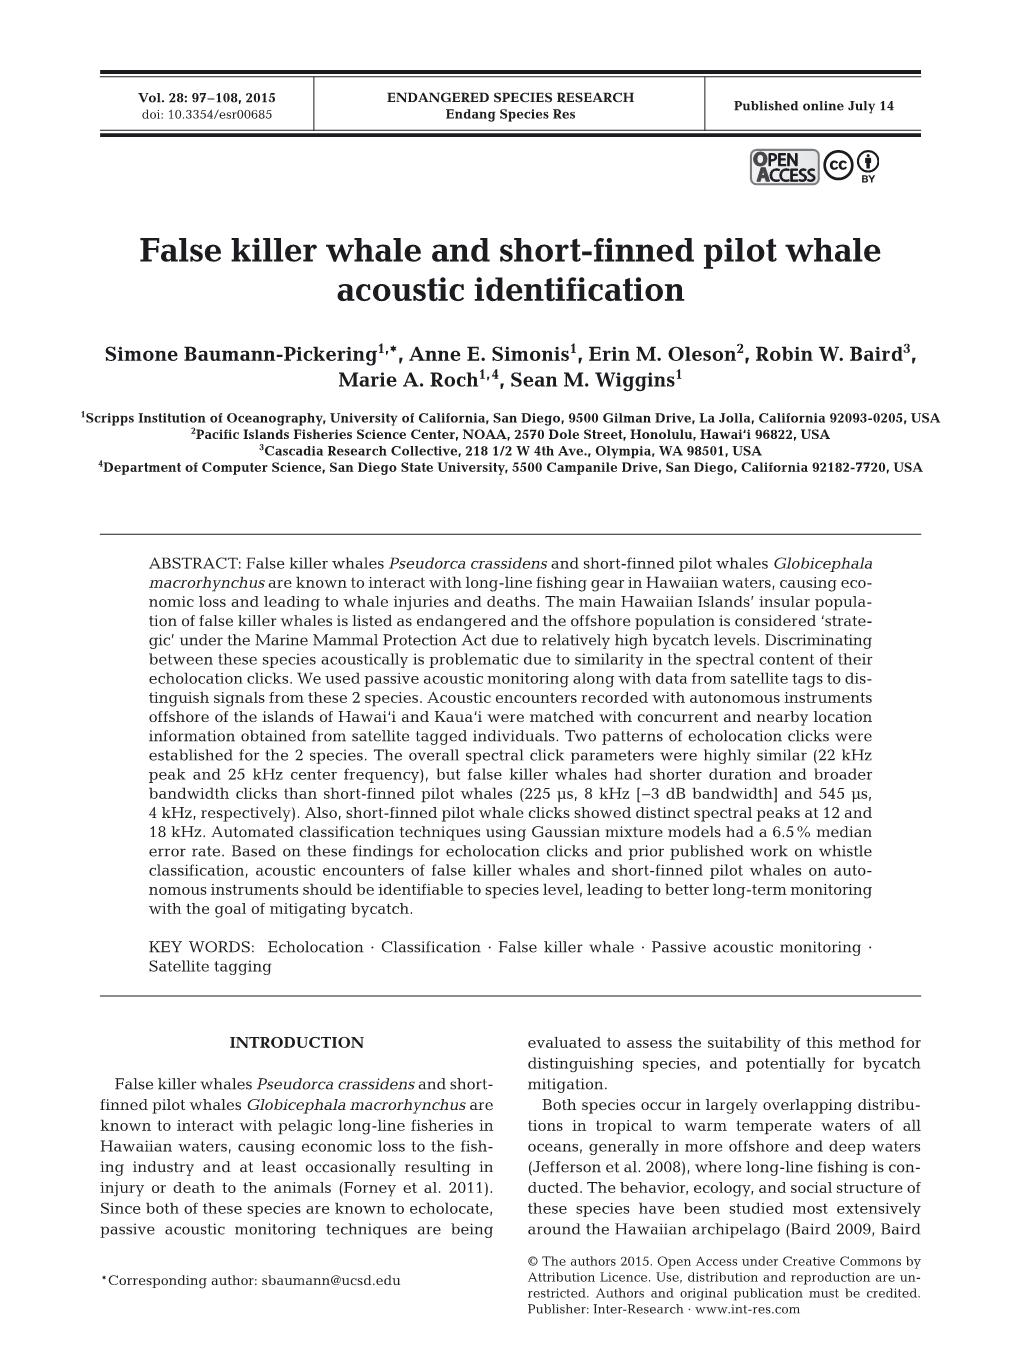 False Killer Whale and Short-Finned Pilot Whale Acoustic Identification